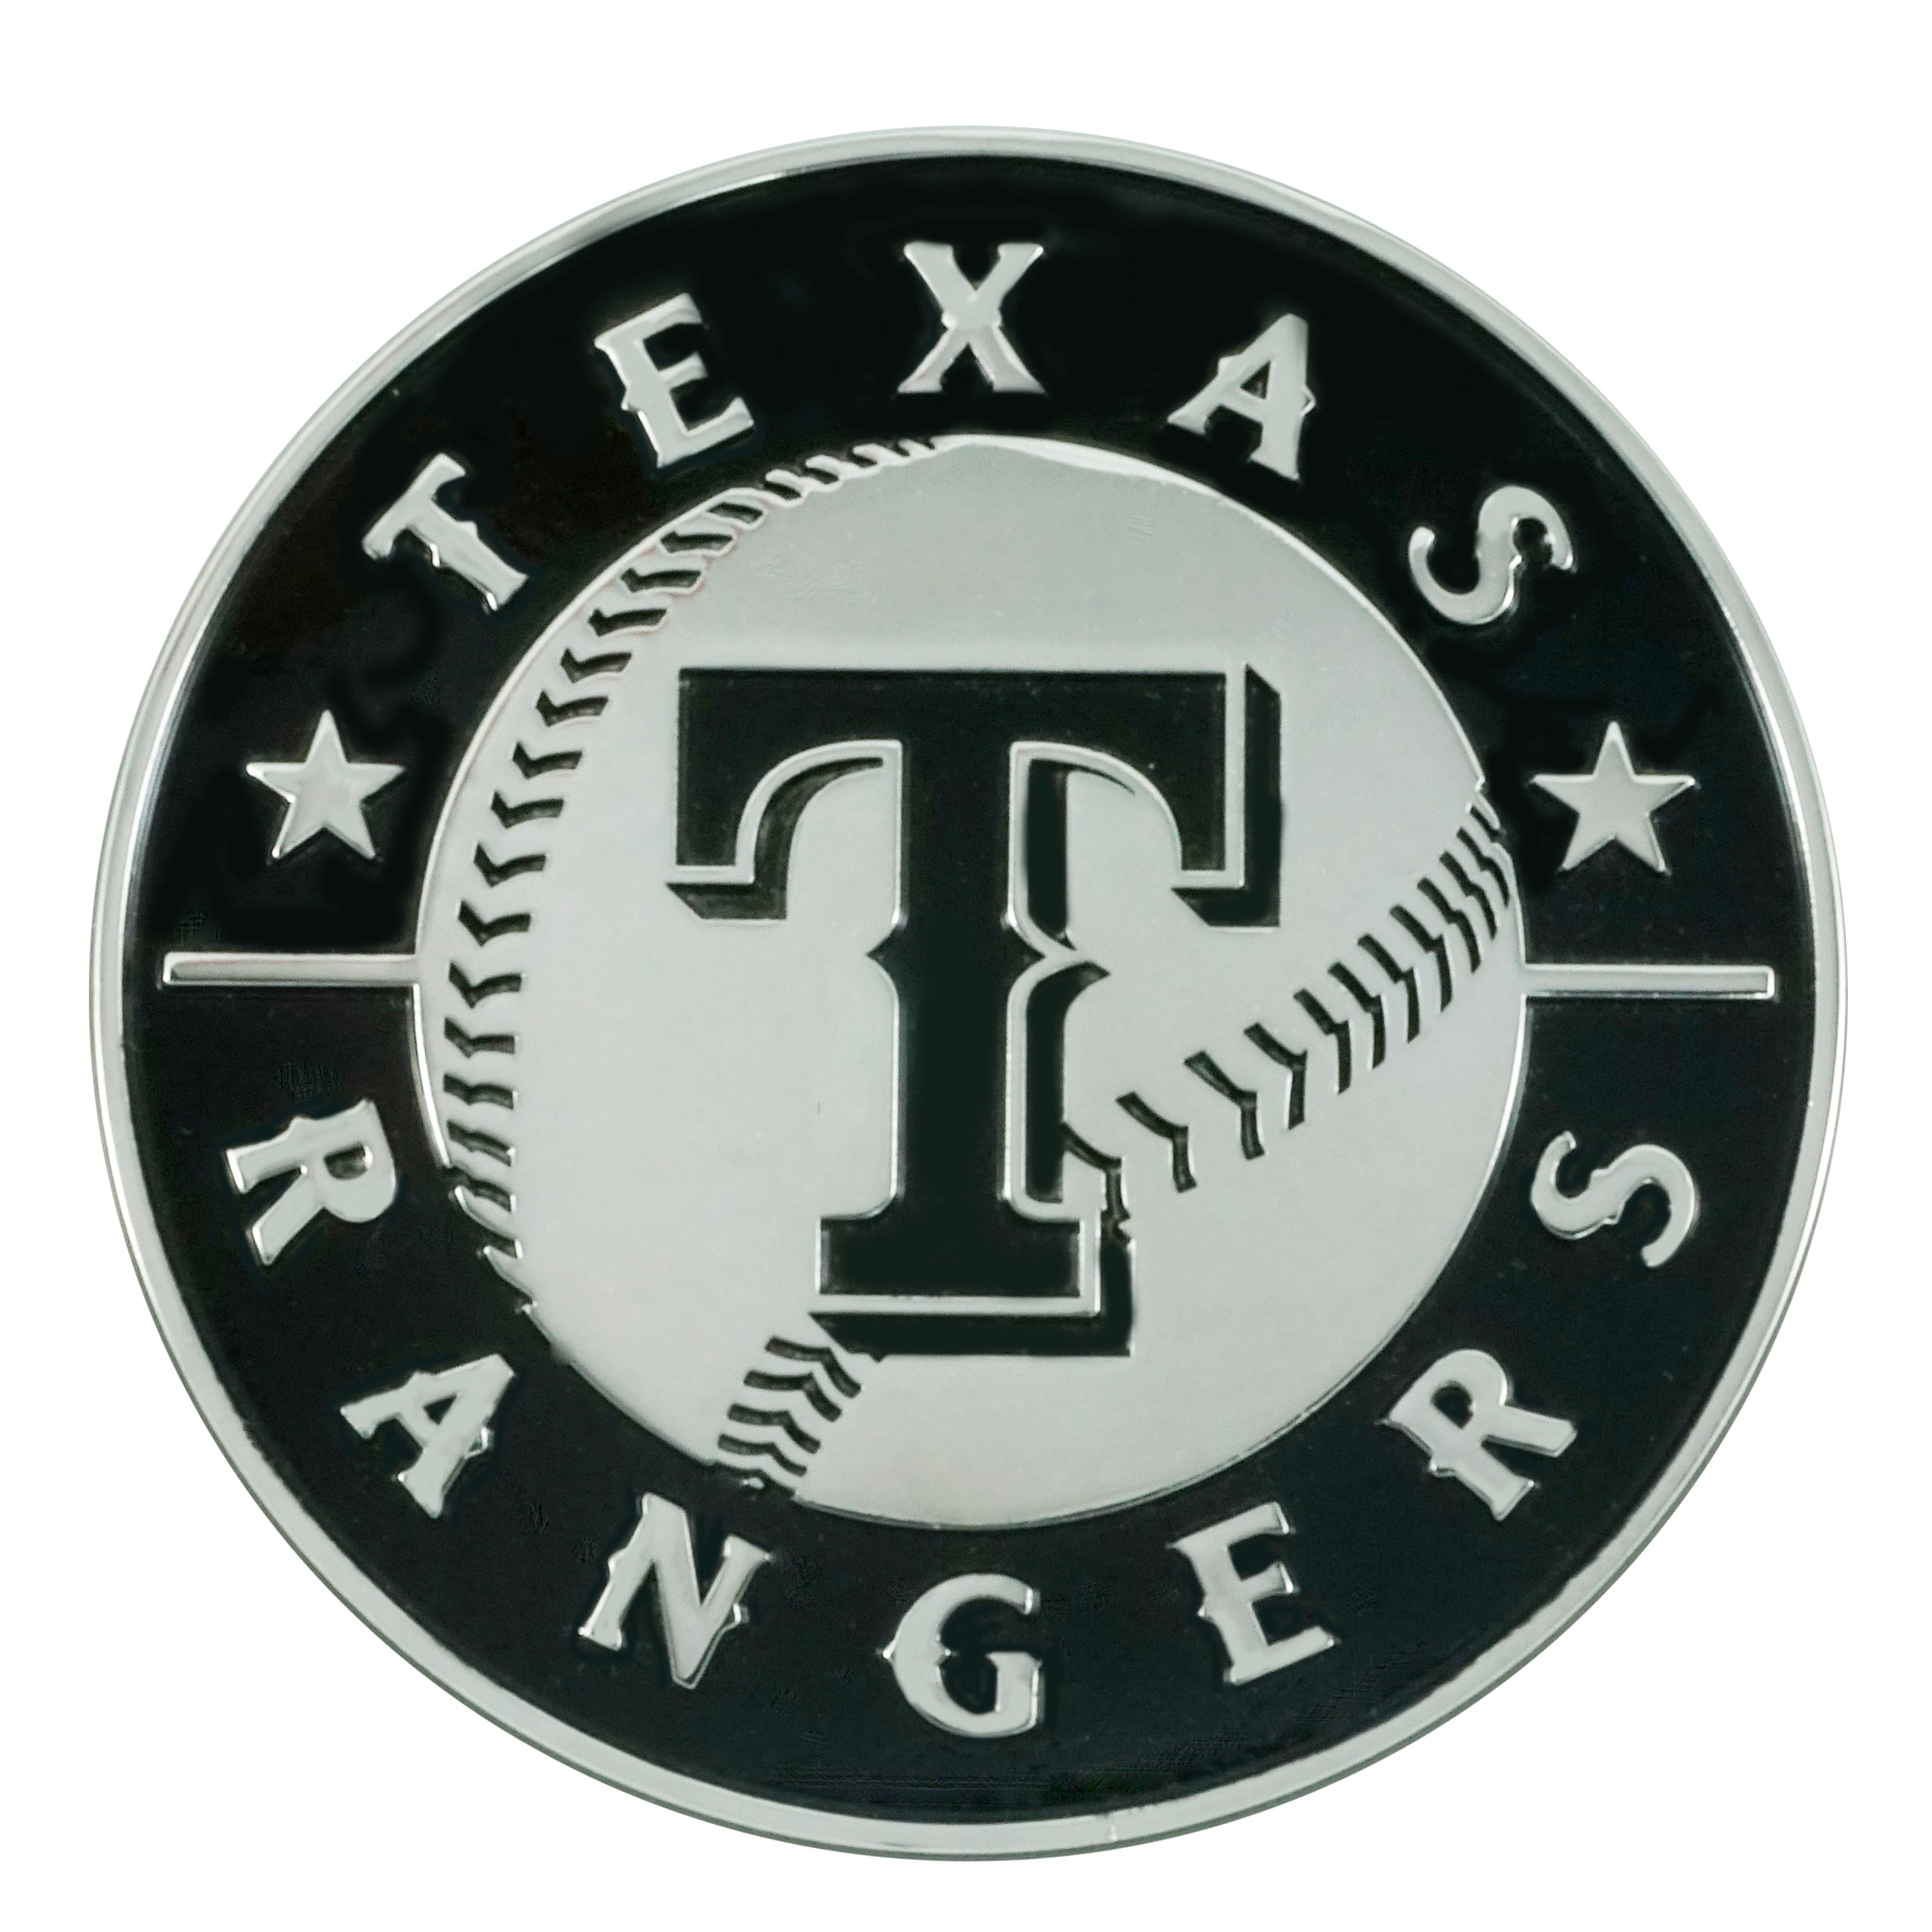 FANMATS Texas Rangers MLB Chrome Emblem Metal Emblem at